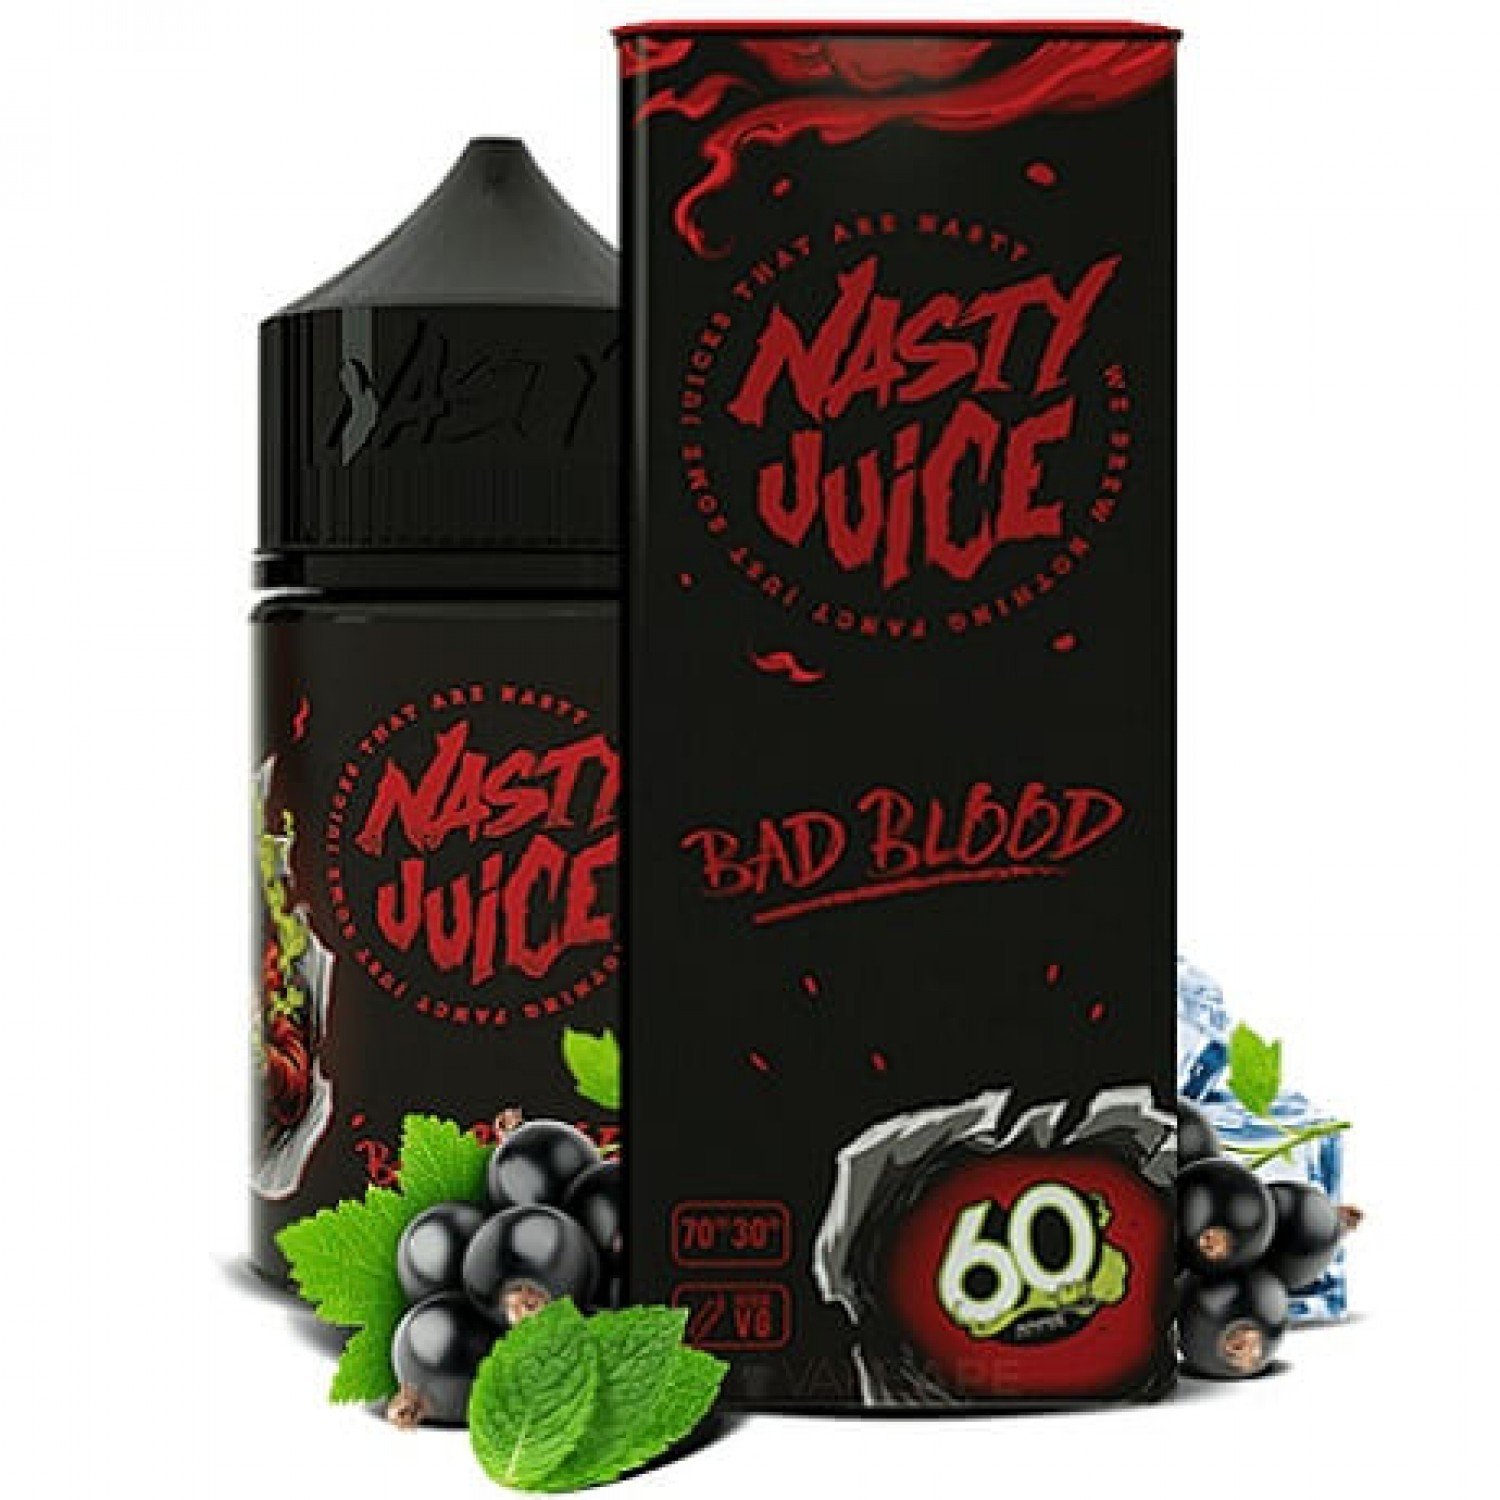 Nasty Juice - Bad Blood 60 ml Premium Likit